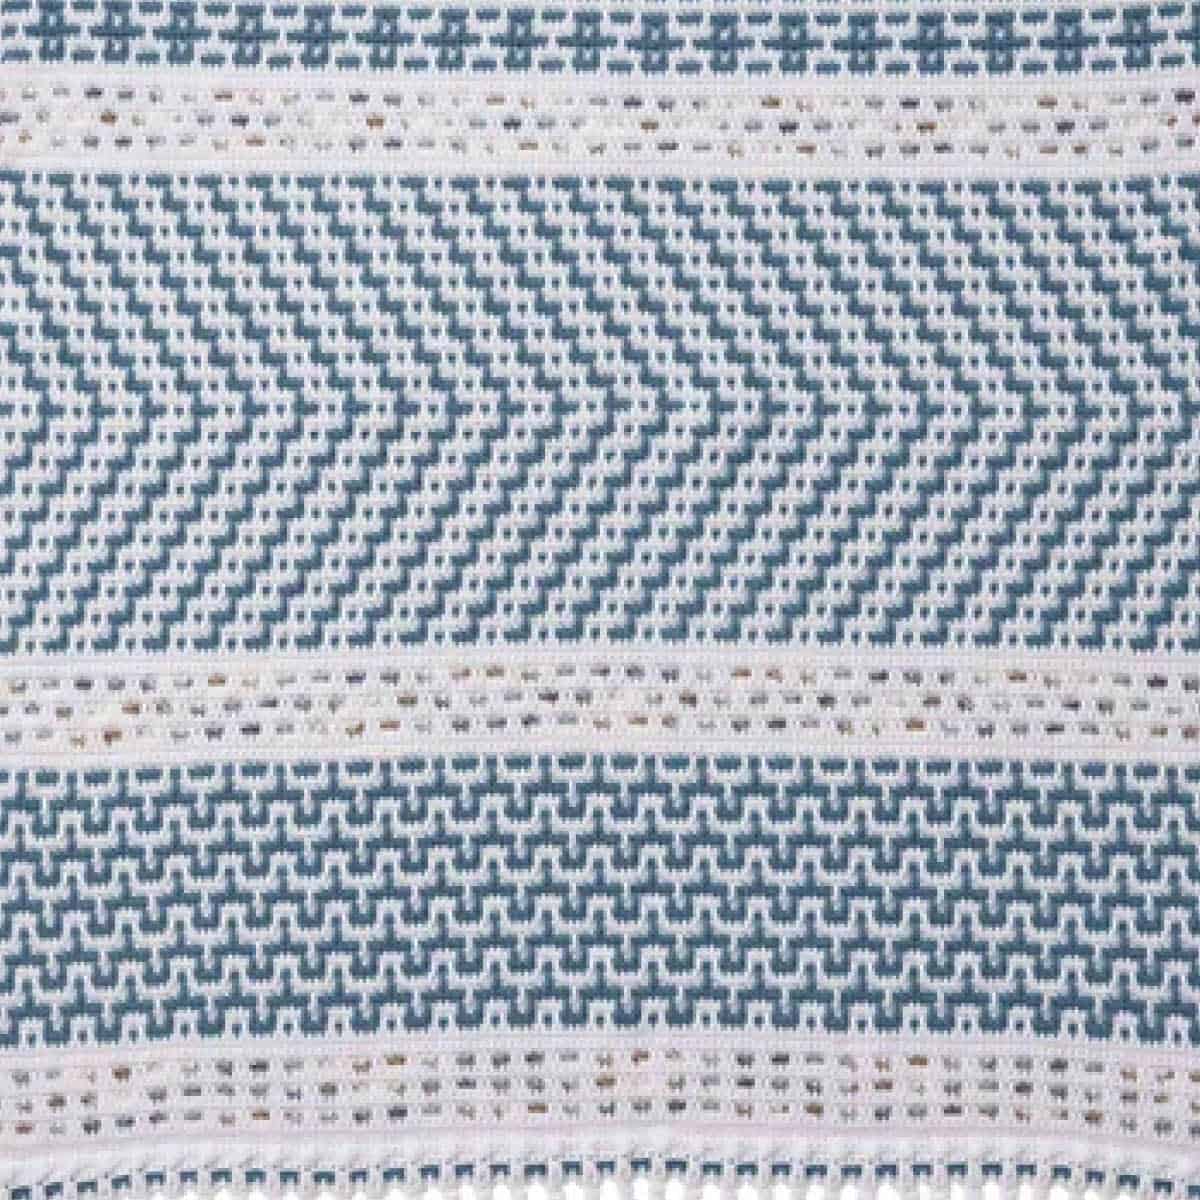 Crochet Mosaic Blankets